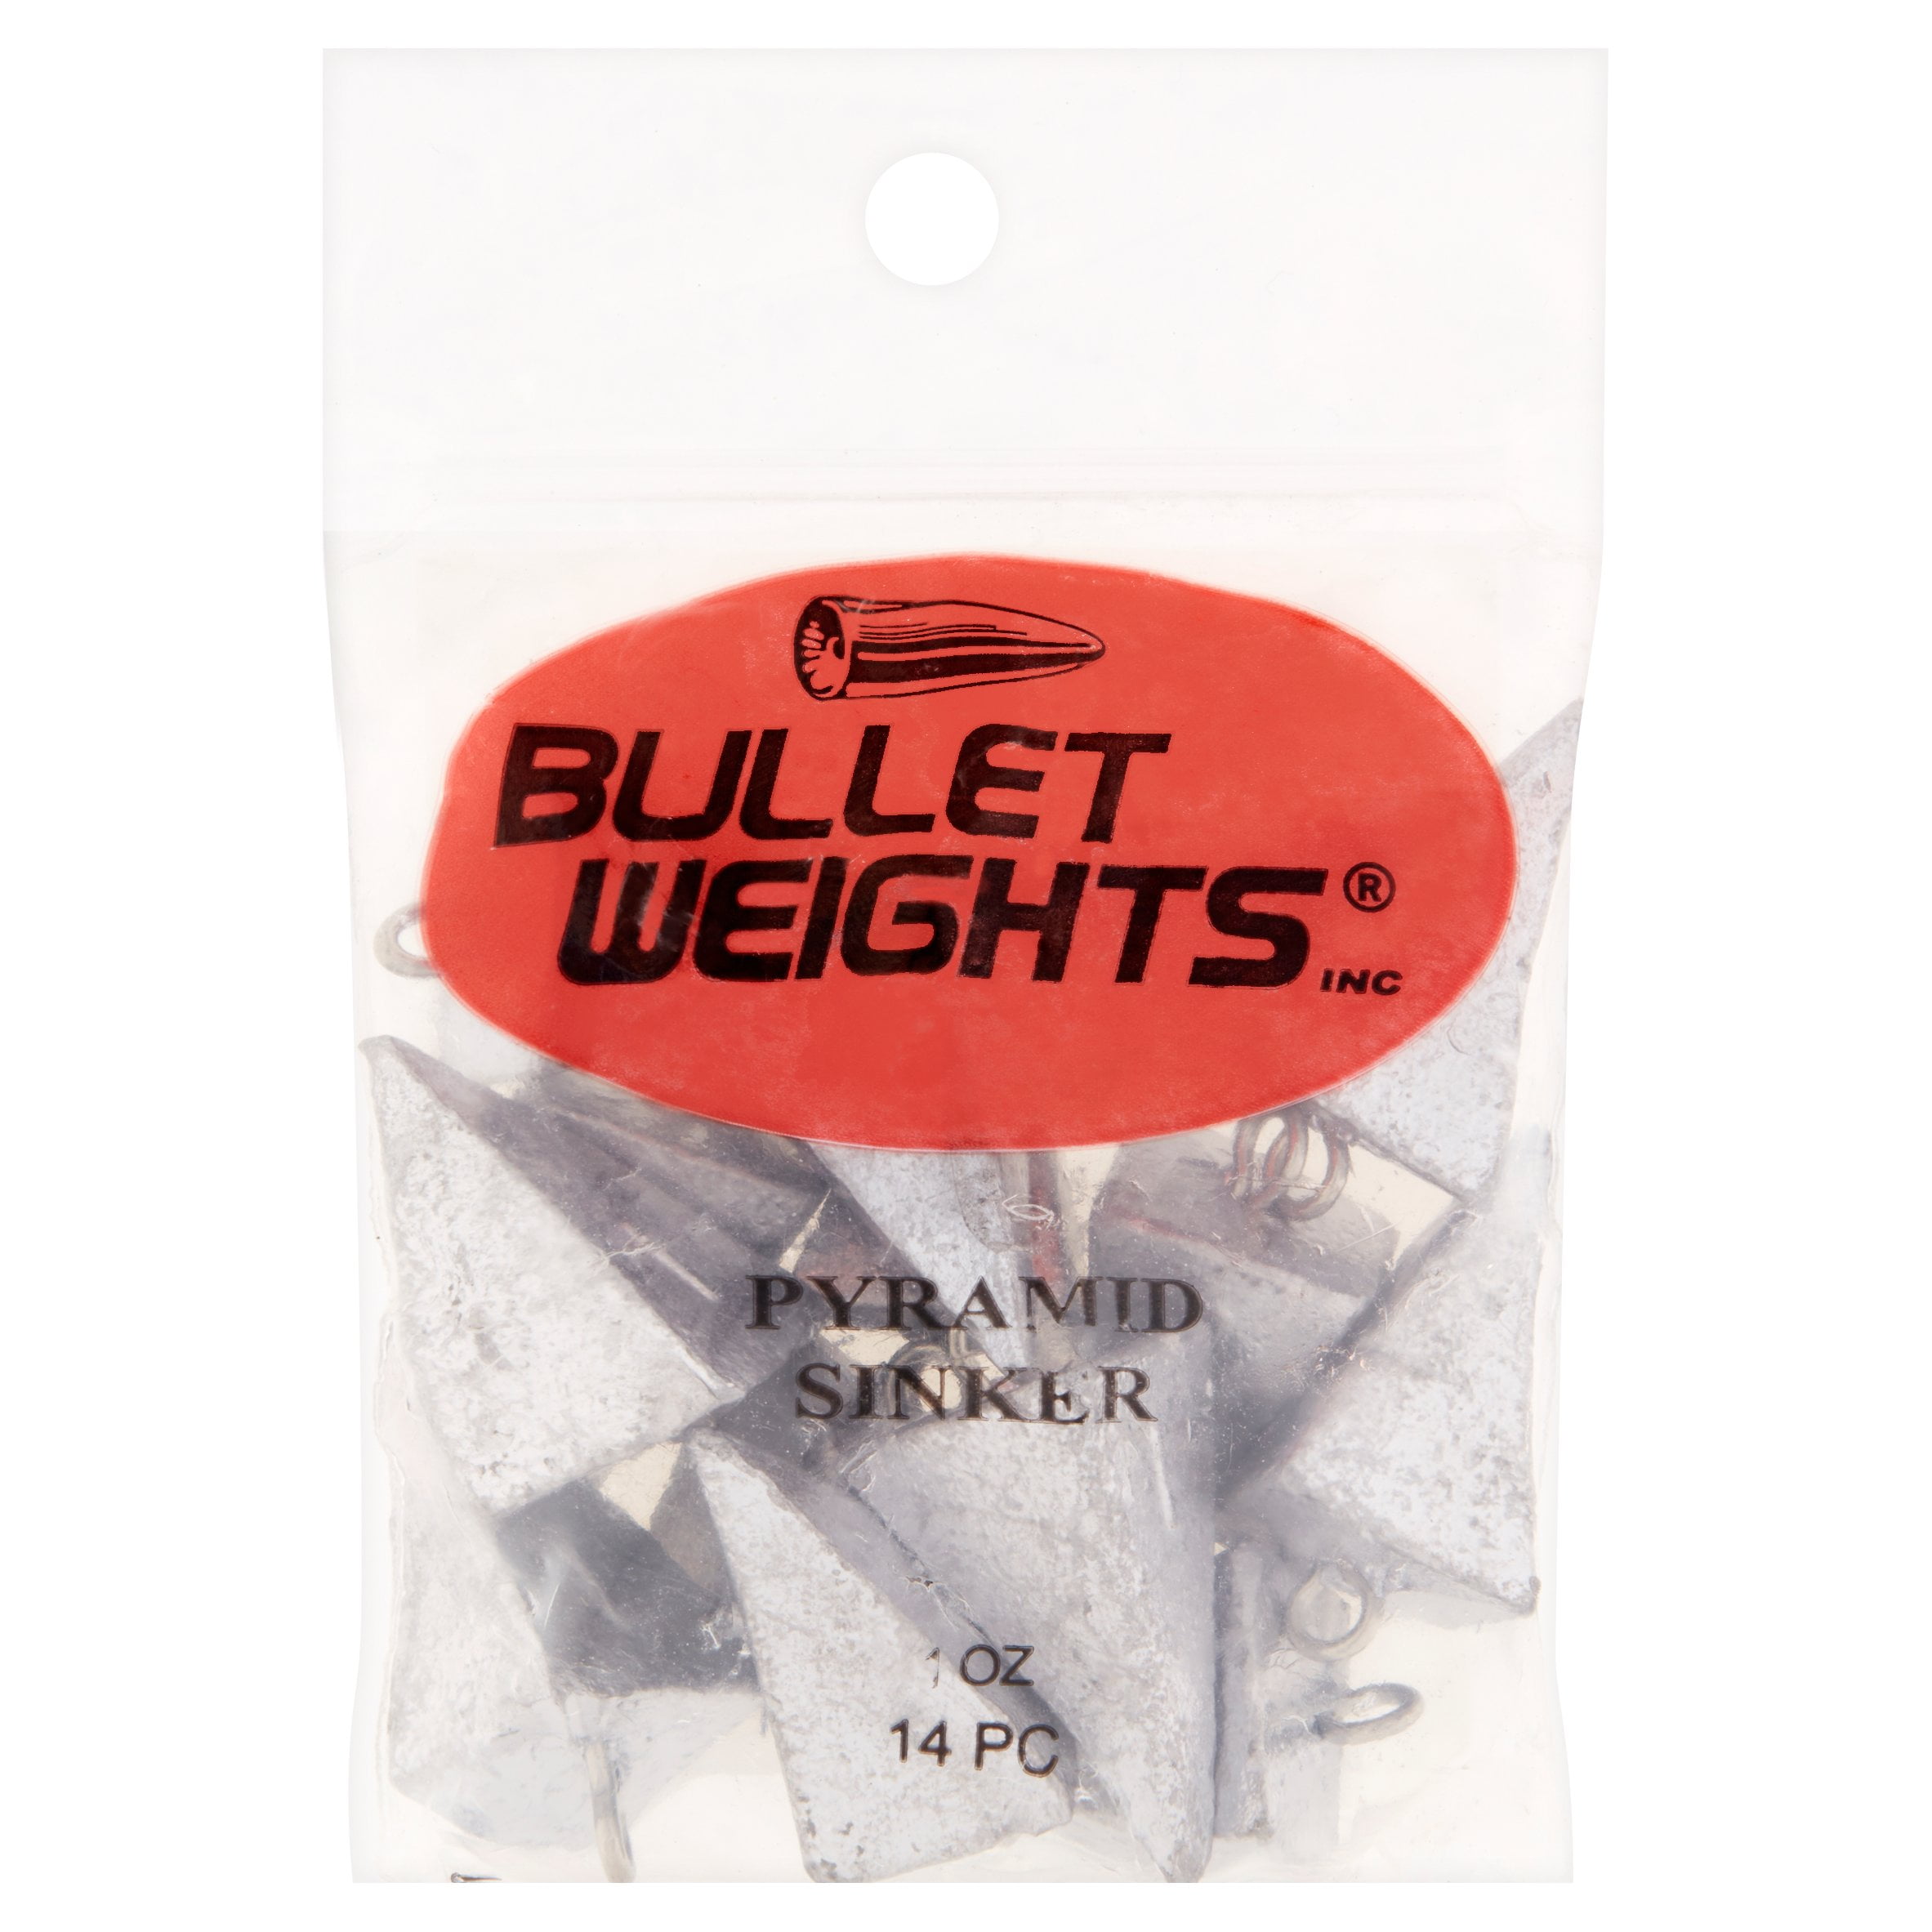 Bullet Weights PBBTJ1 Bullet Jig Sinker 1 oz 6 PC